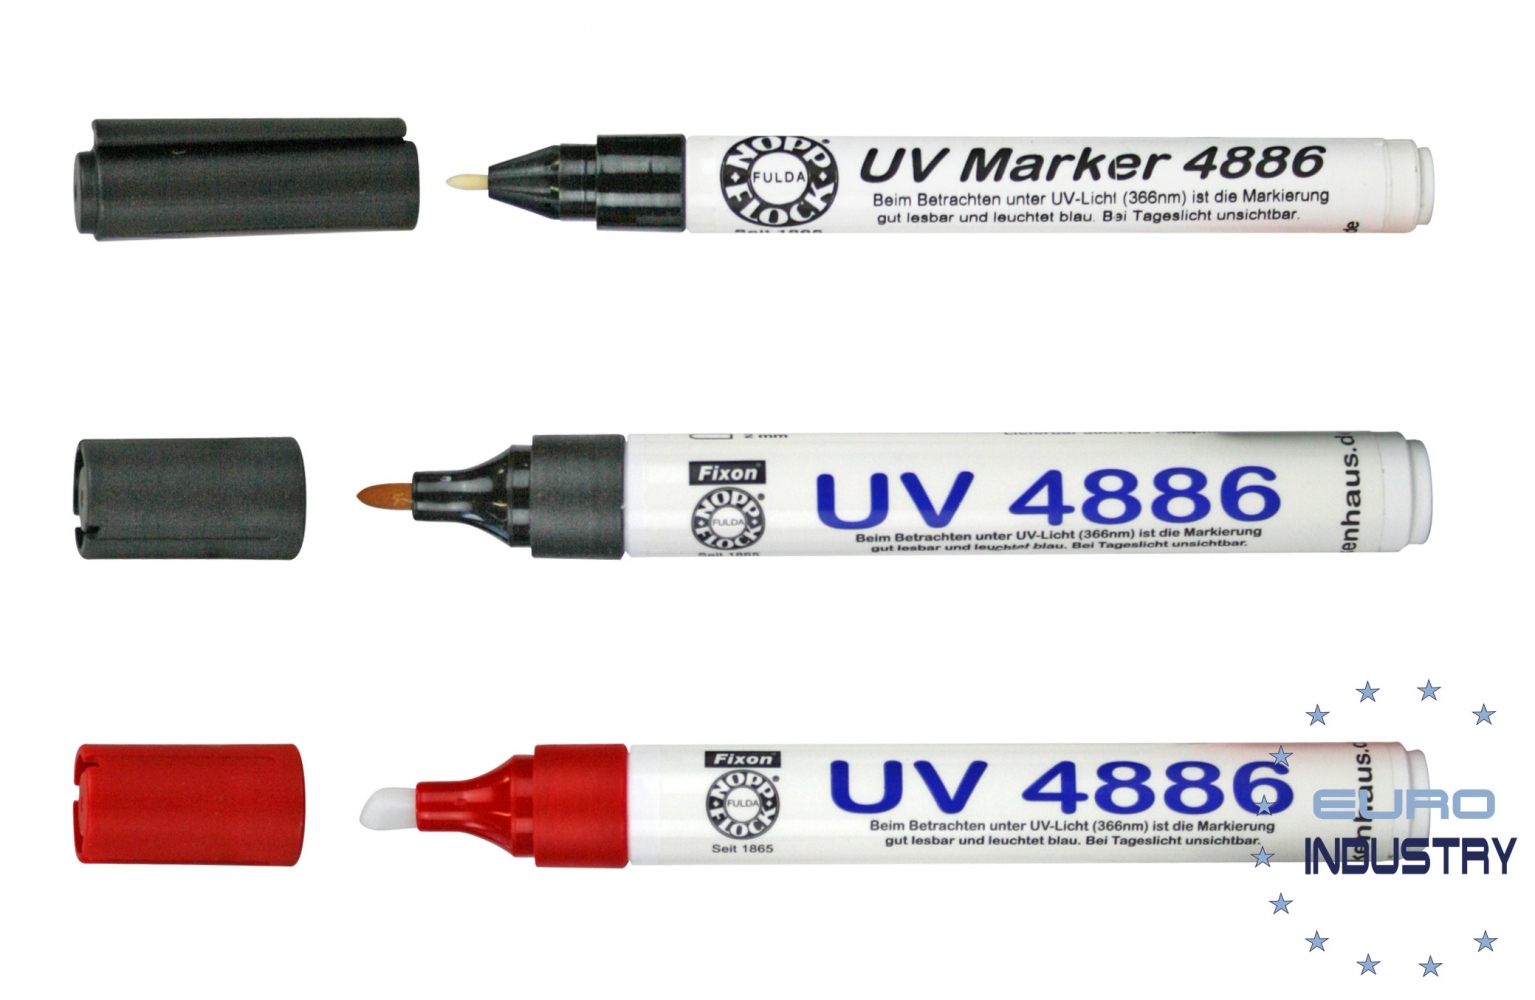 UV 4886 Erasable UV Marker - online purchase